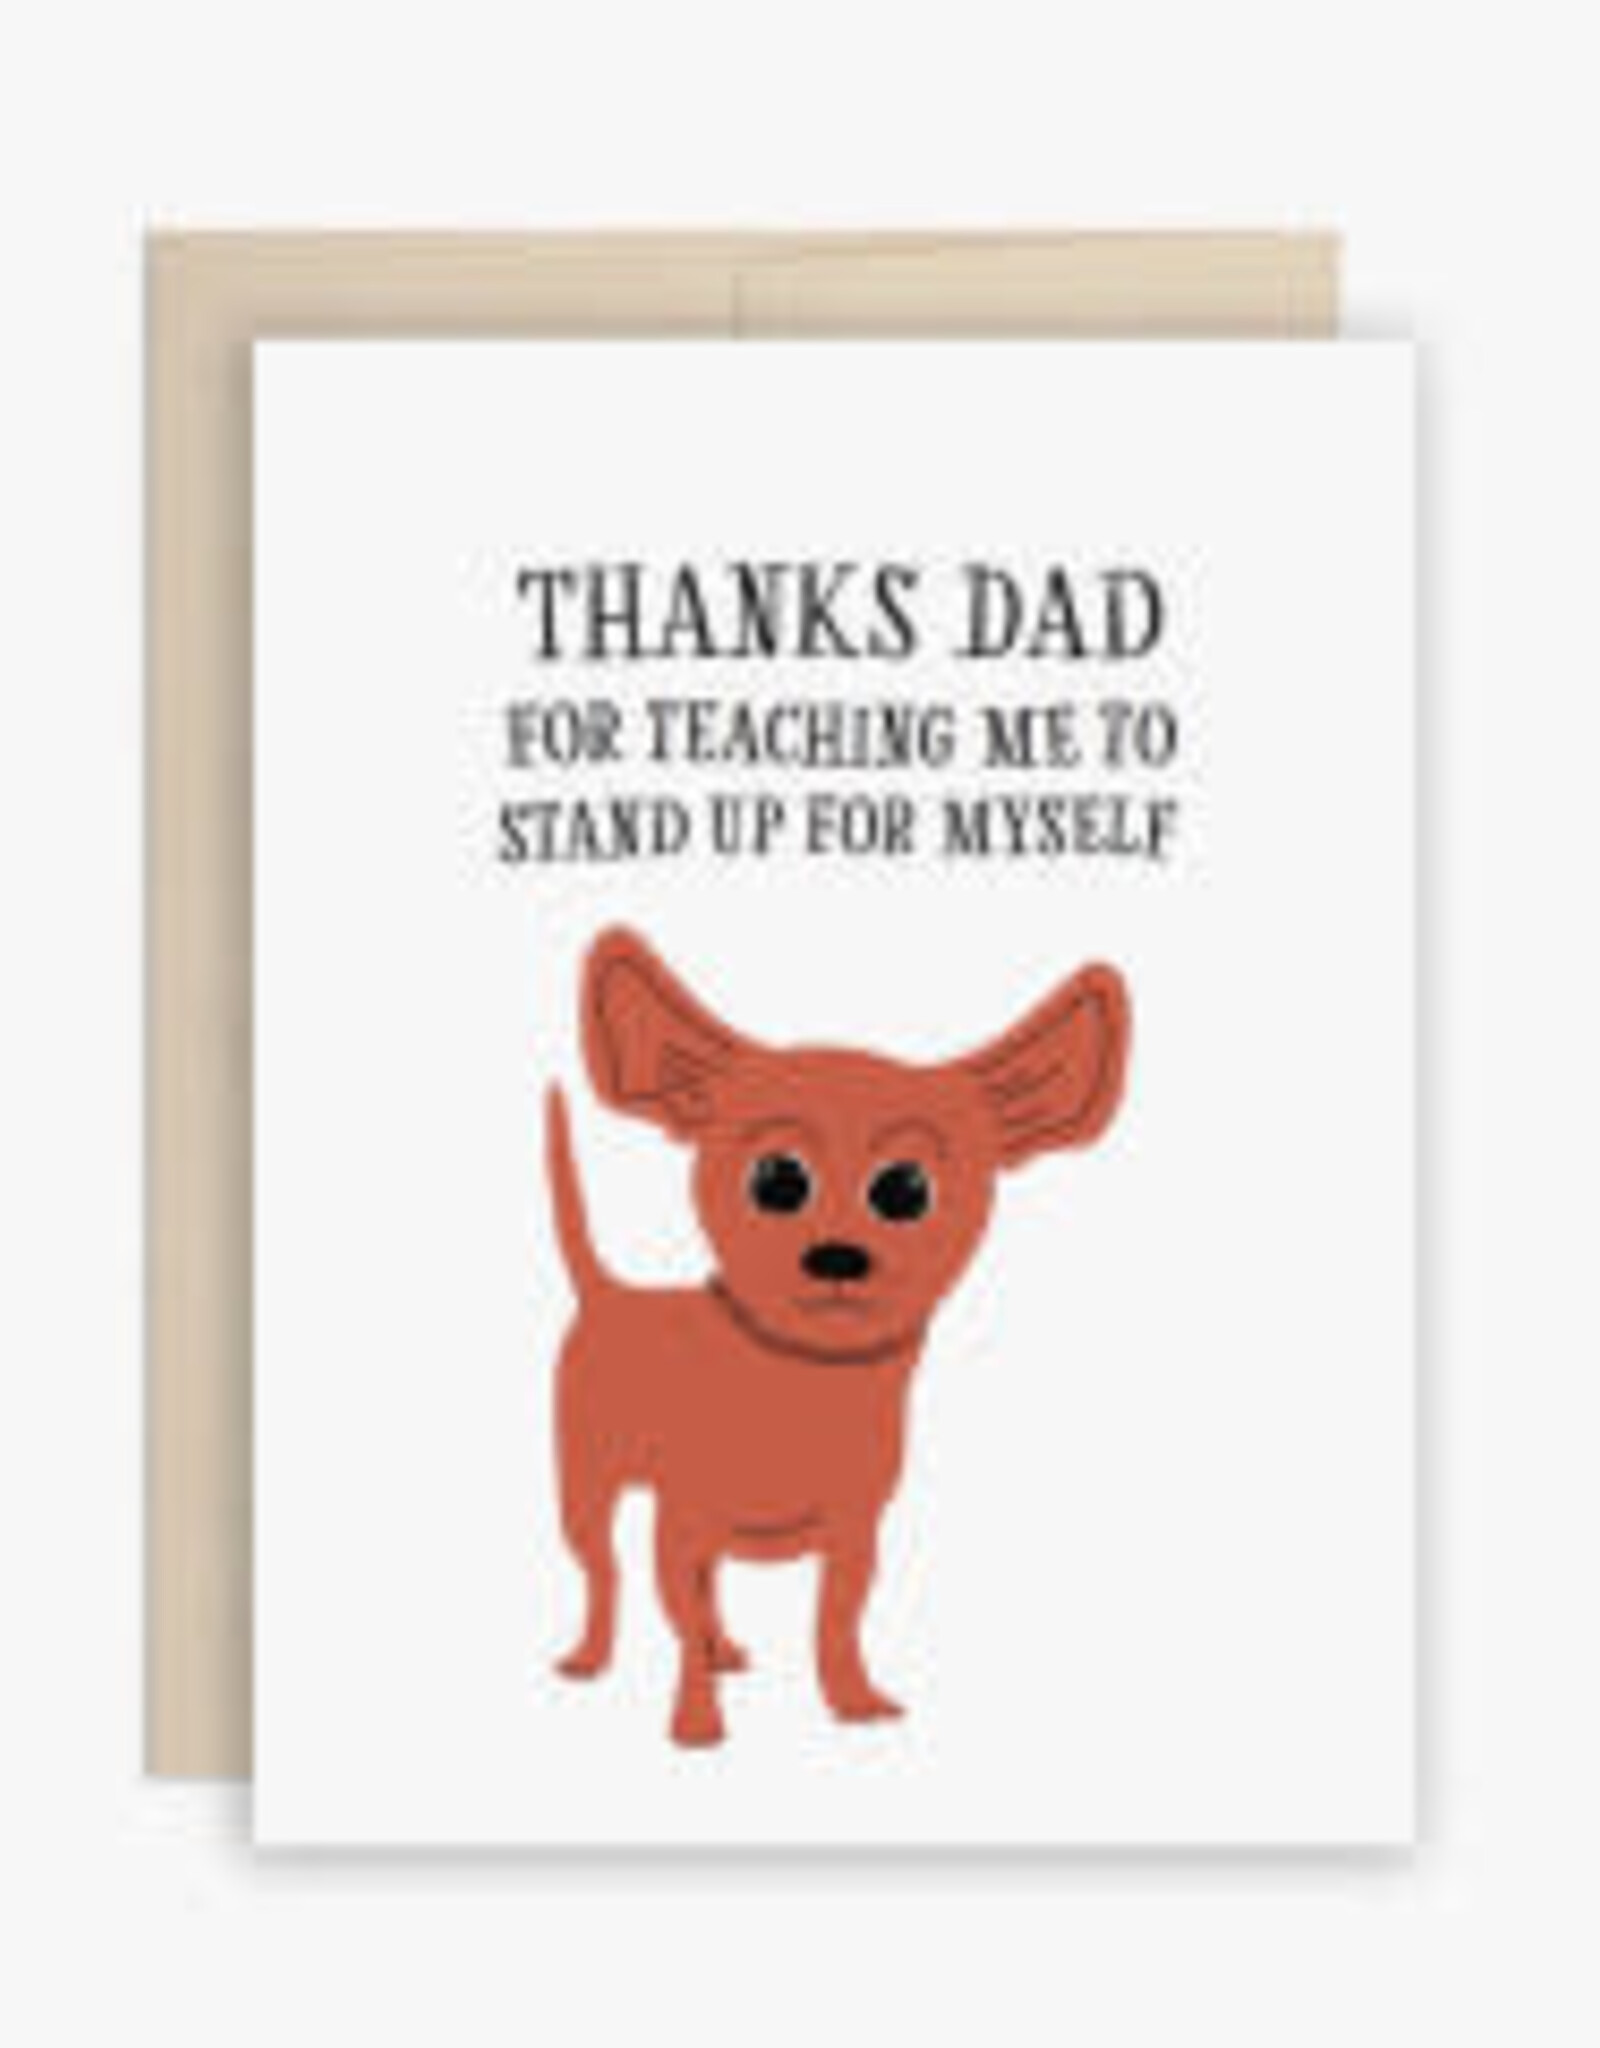 Thanks Dad Chihuahua Greeting Card